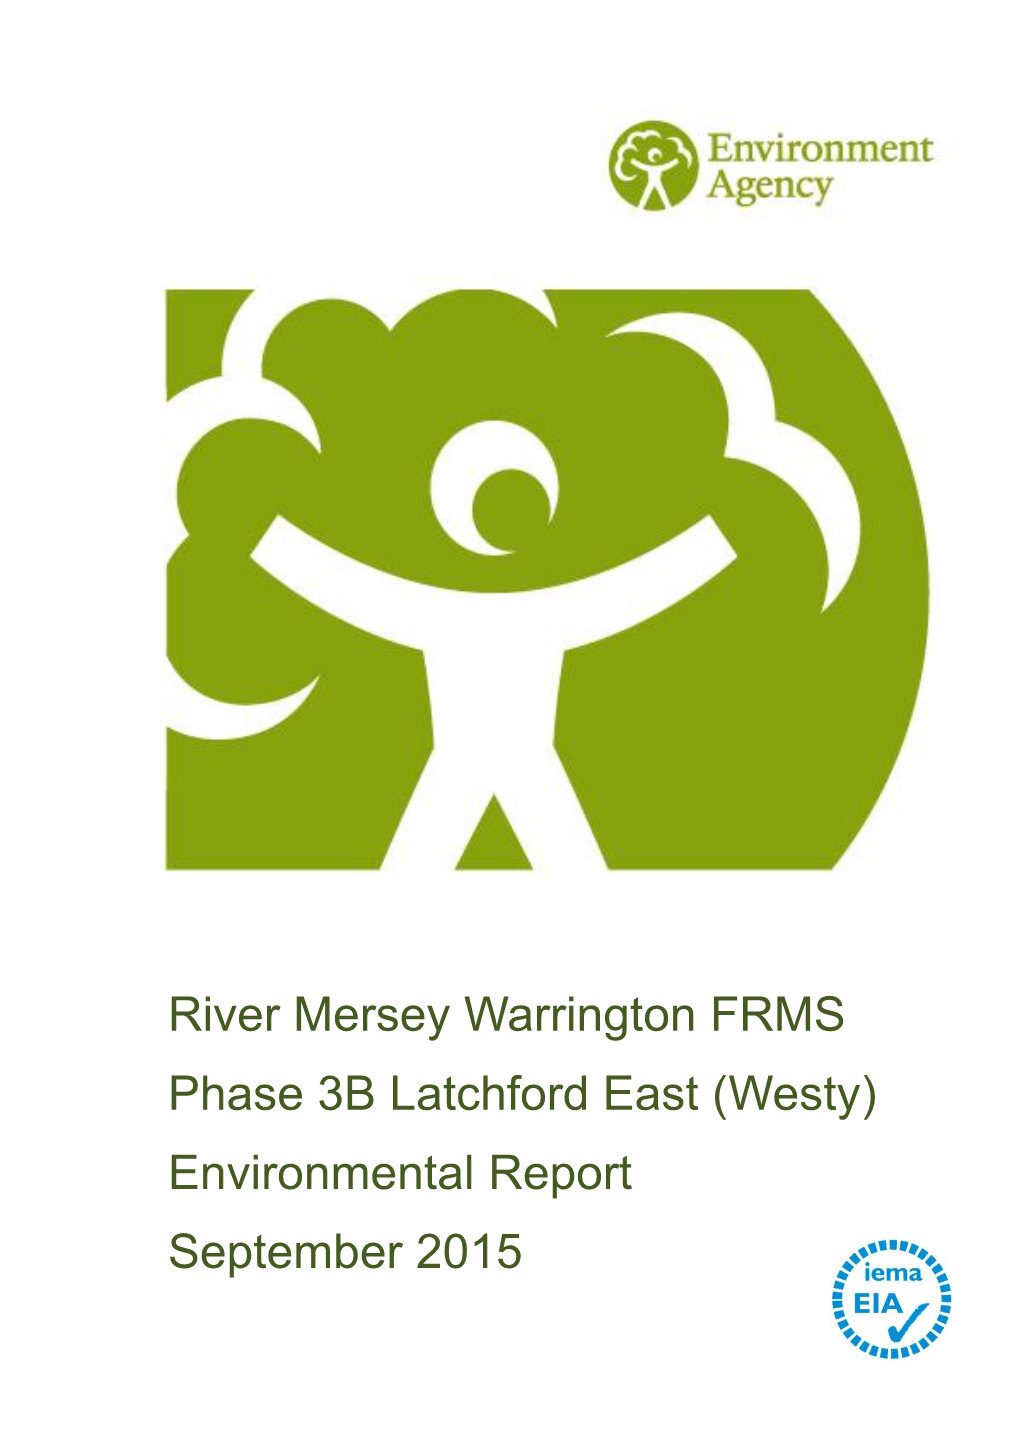 Westy) Environmental Report September 2015